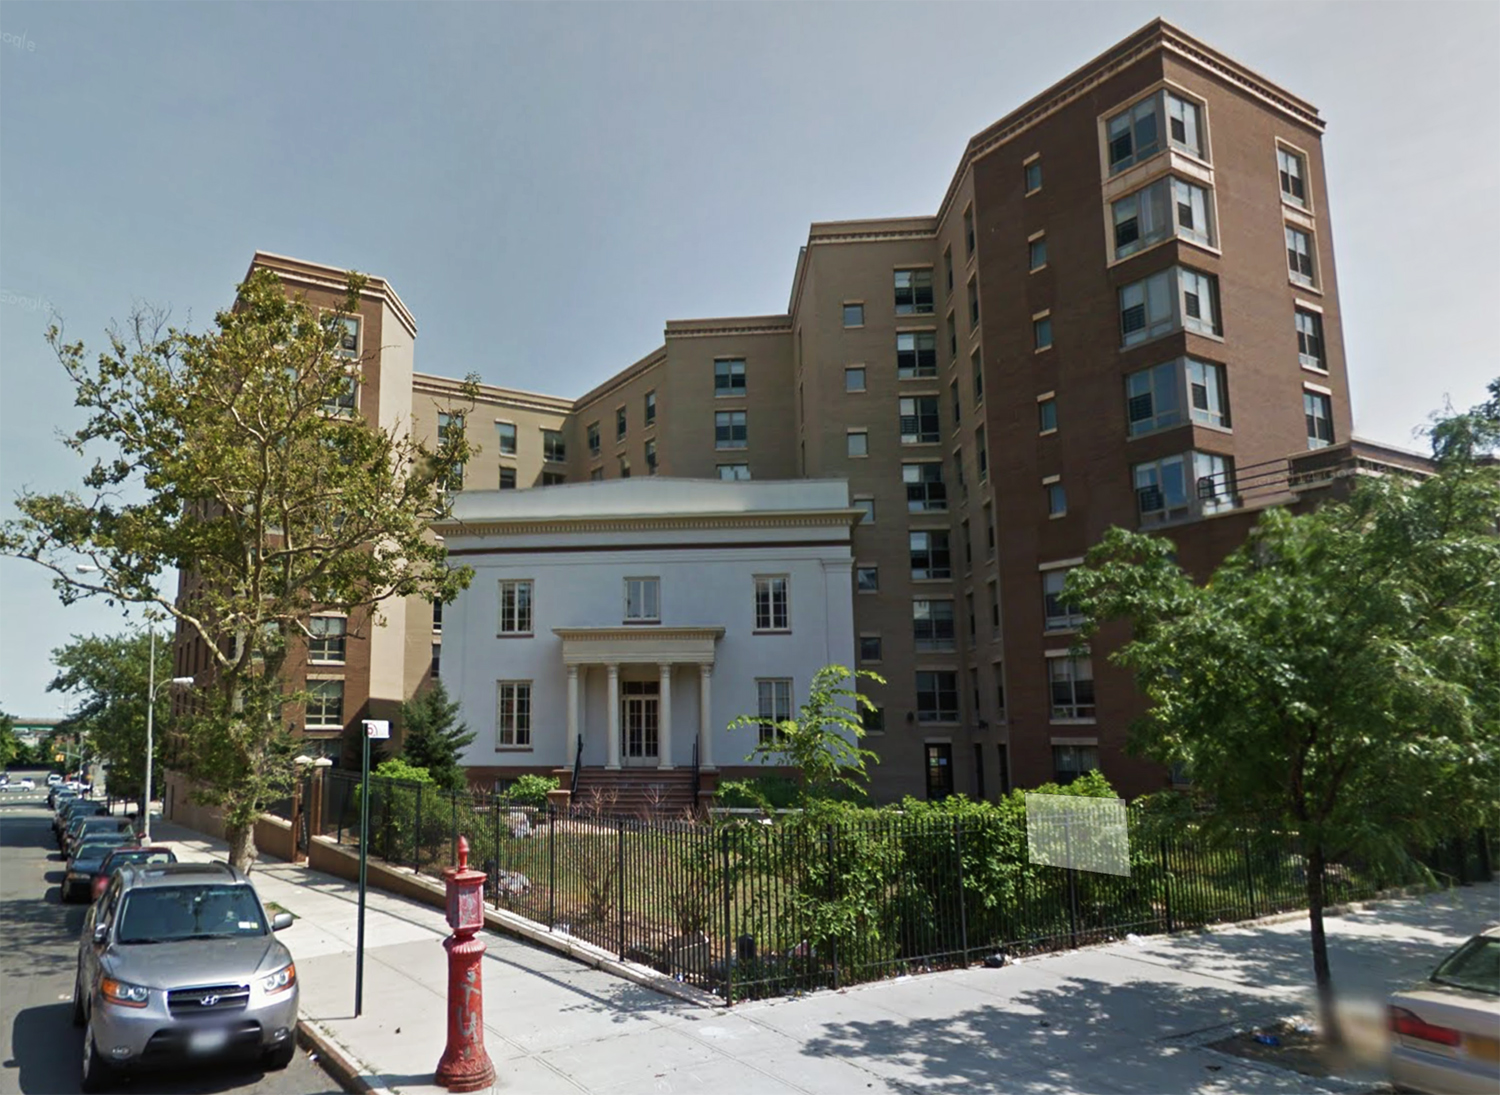 Cedars/Fox Hall at 745 Fox Street in the Bronx. Photo via Google Maps.